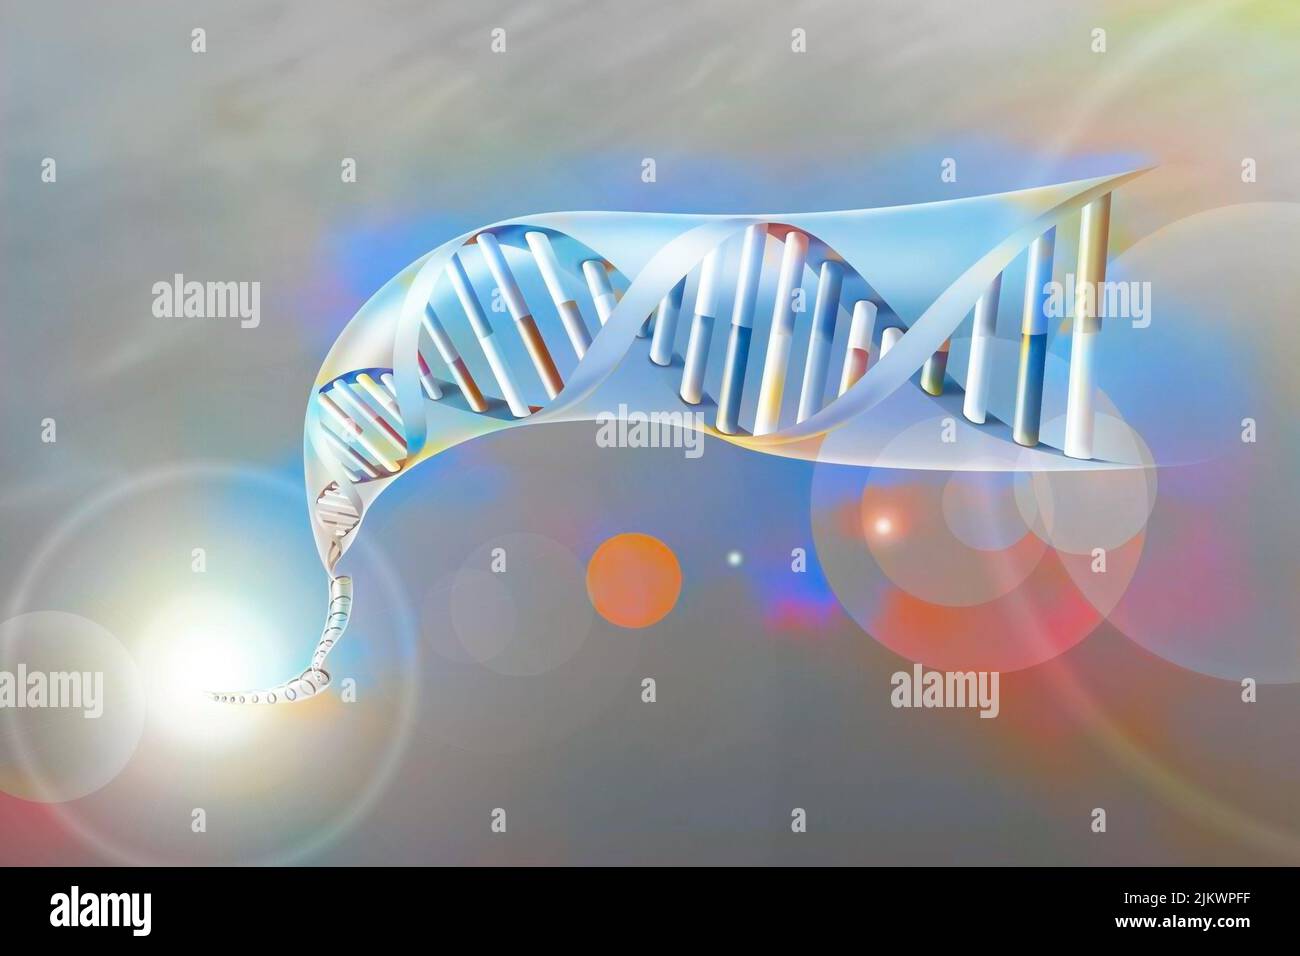 Doppelhelix der DNA mit den Nukleotidbasen: Adenin, Thymin, Cytosin und Guanin. Stockfoto